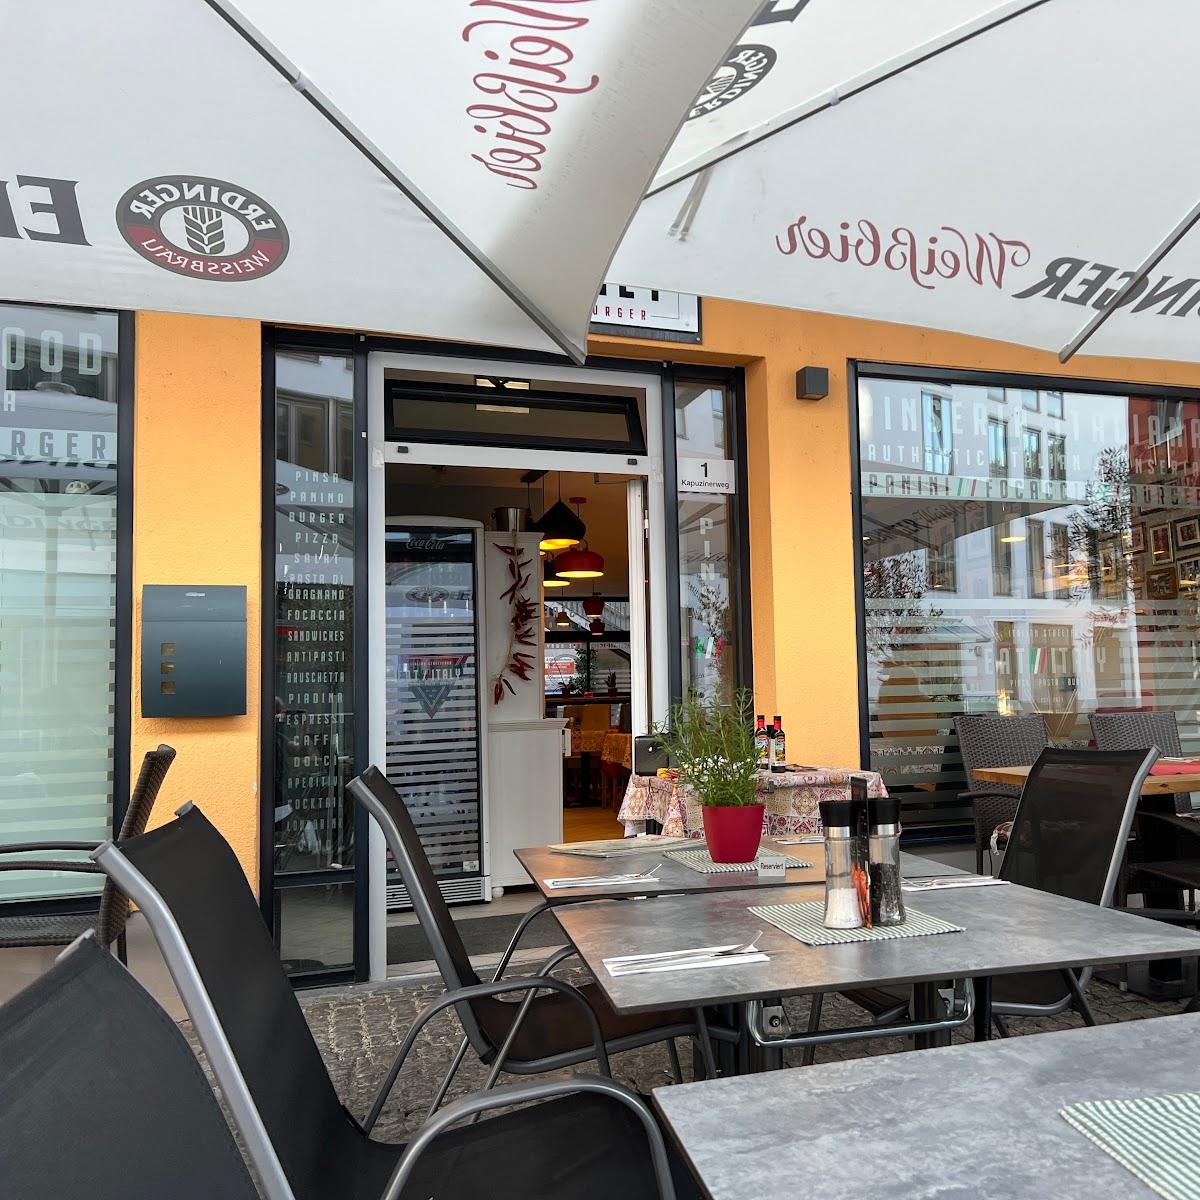 Restaurant "Eat-Italy-" in Landshut